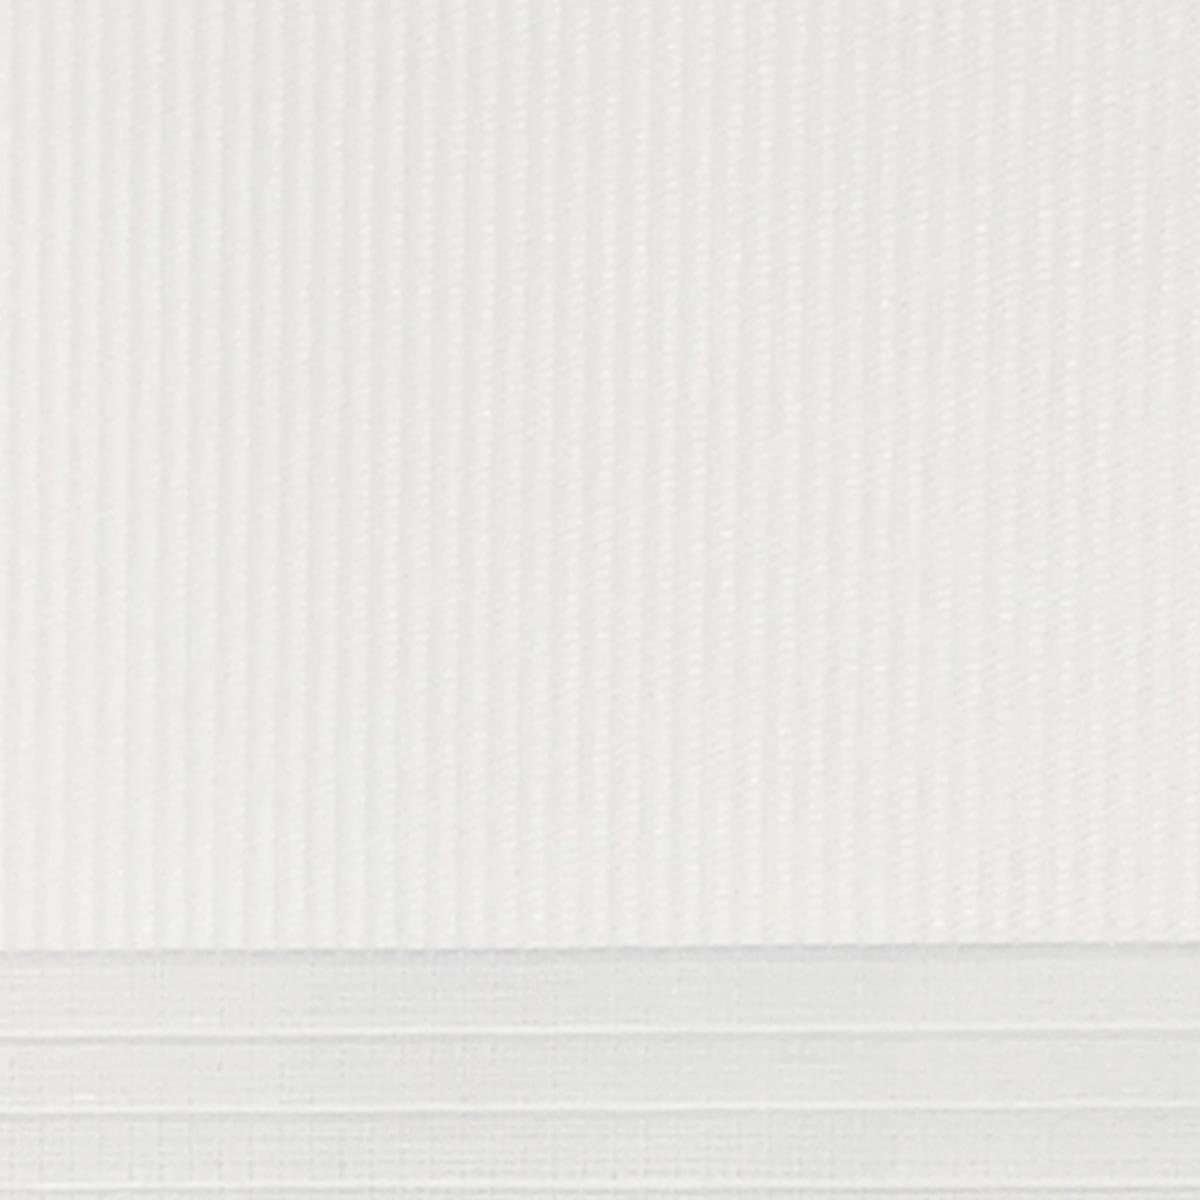 Persiana Wolett Translucida Prime 1.60 X 1.80  Blanco Classic